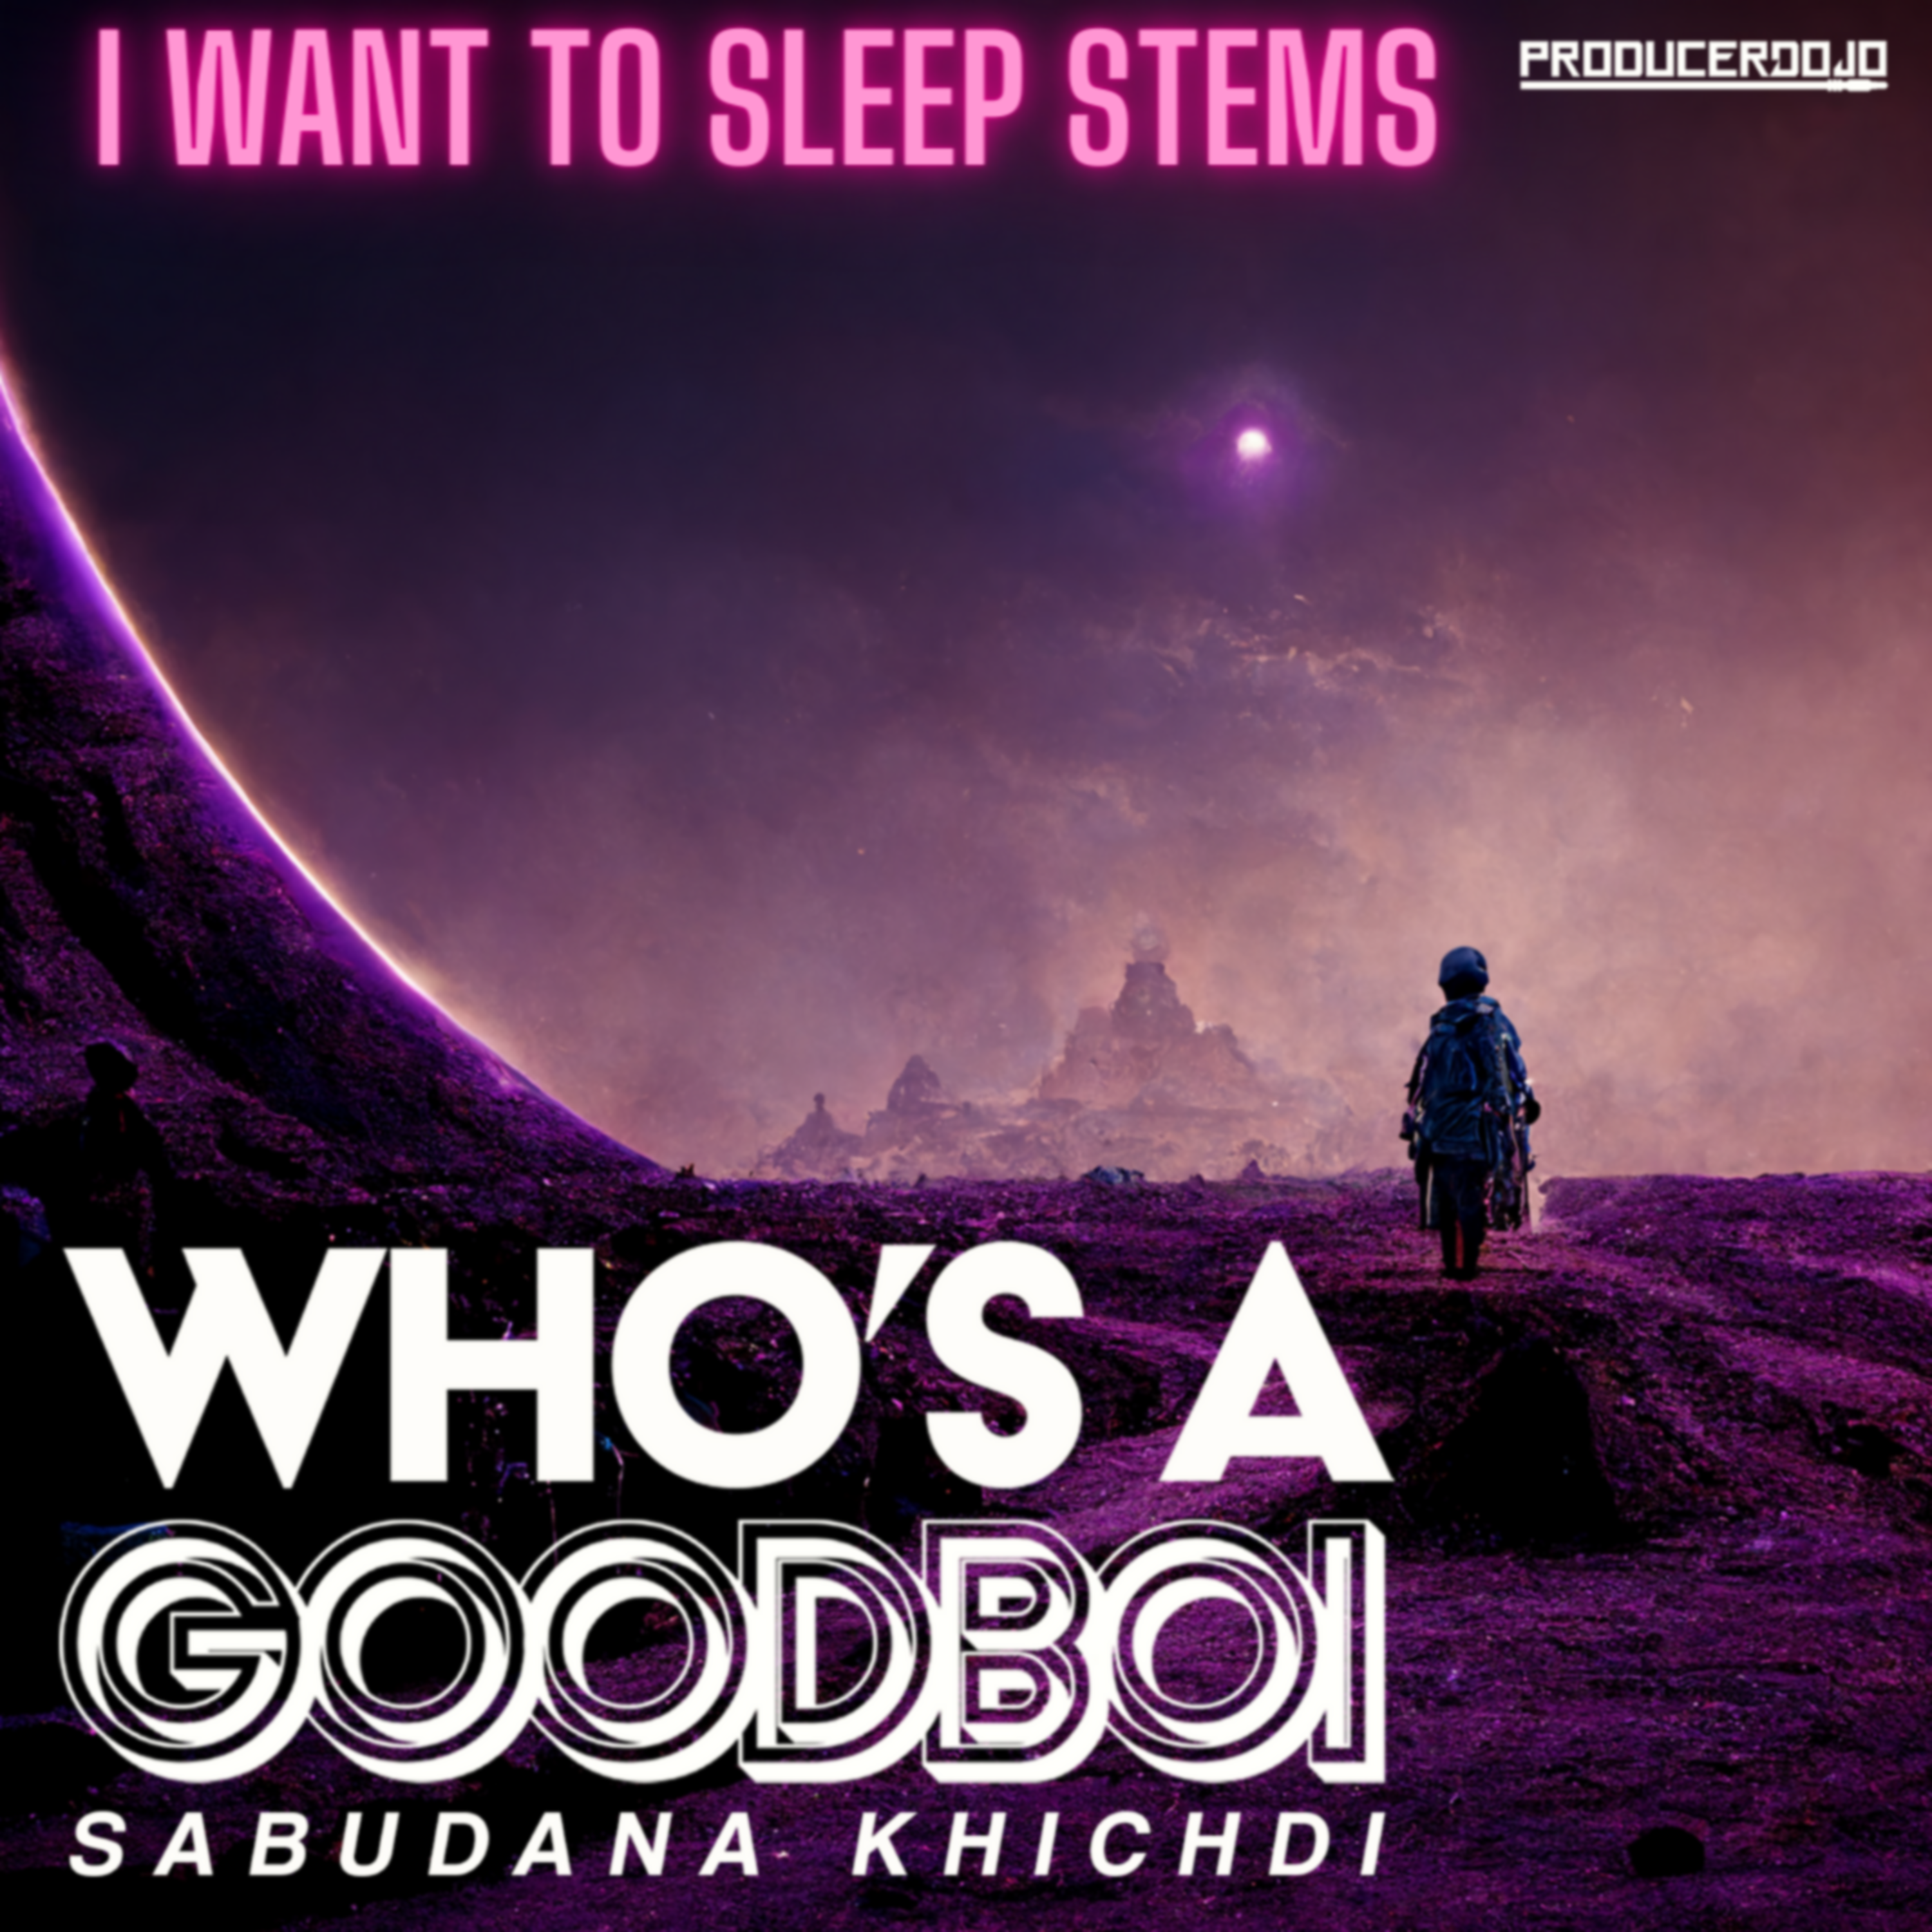 Who's A GoodBoi Stems - I Want To Sleep